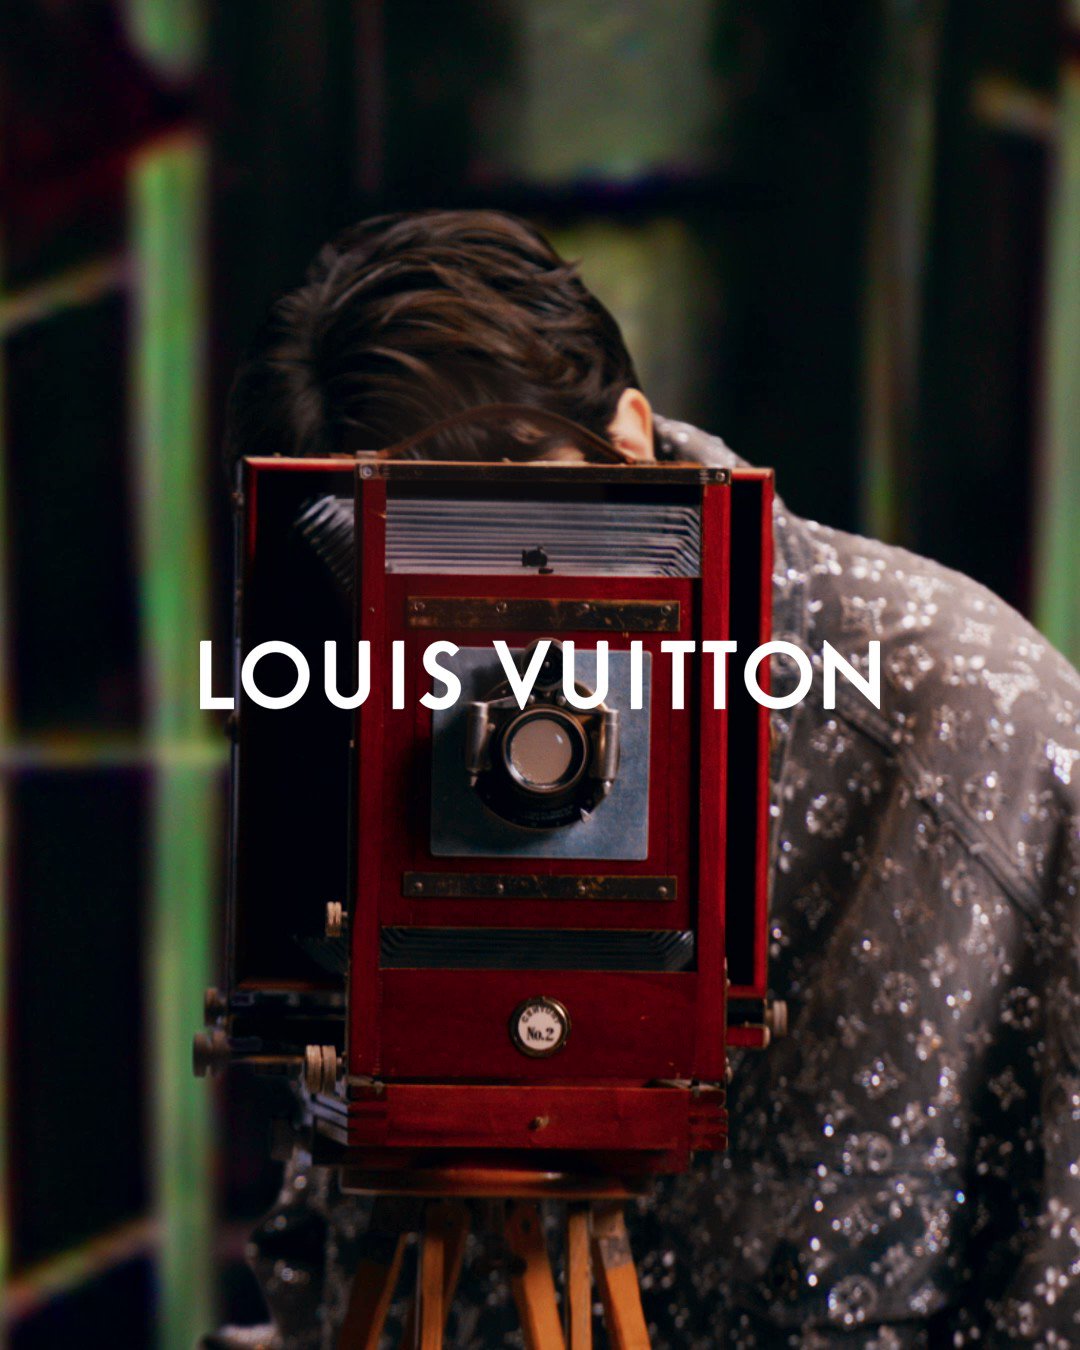 Louis Vuitton on X: #jhope in #LouisVuitton. The @bts_twt member